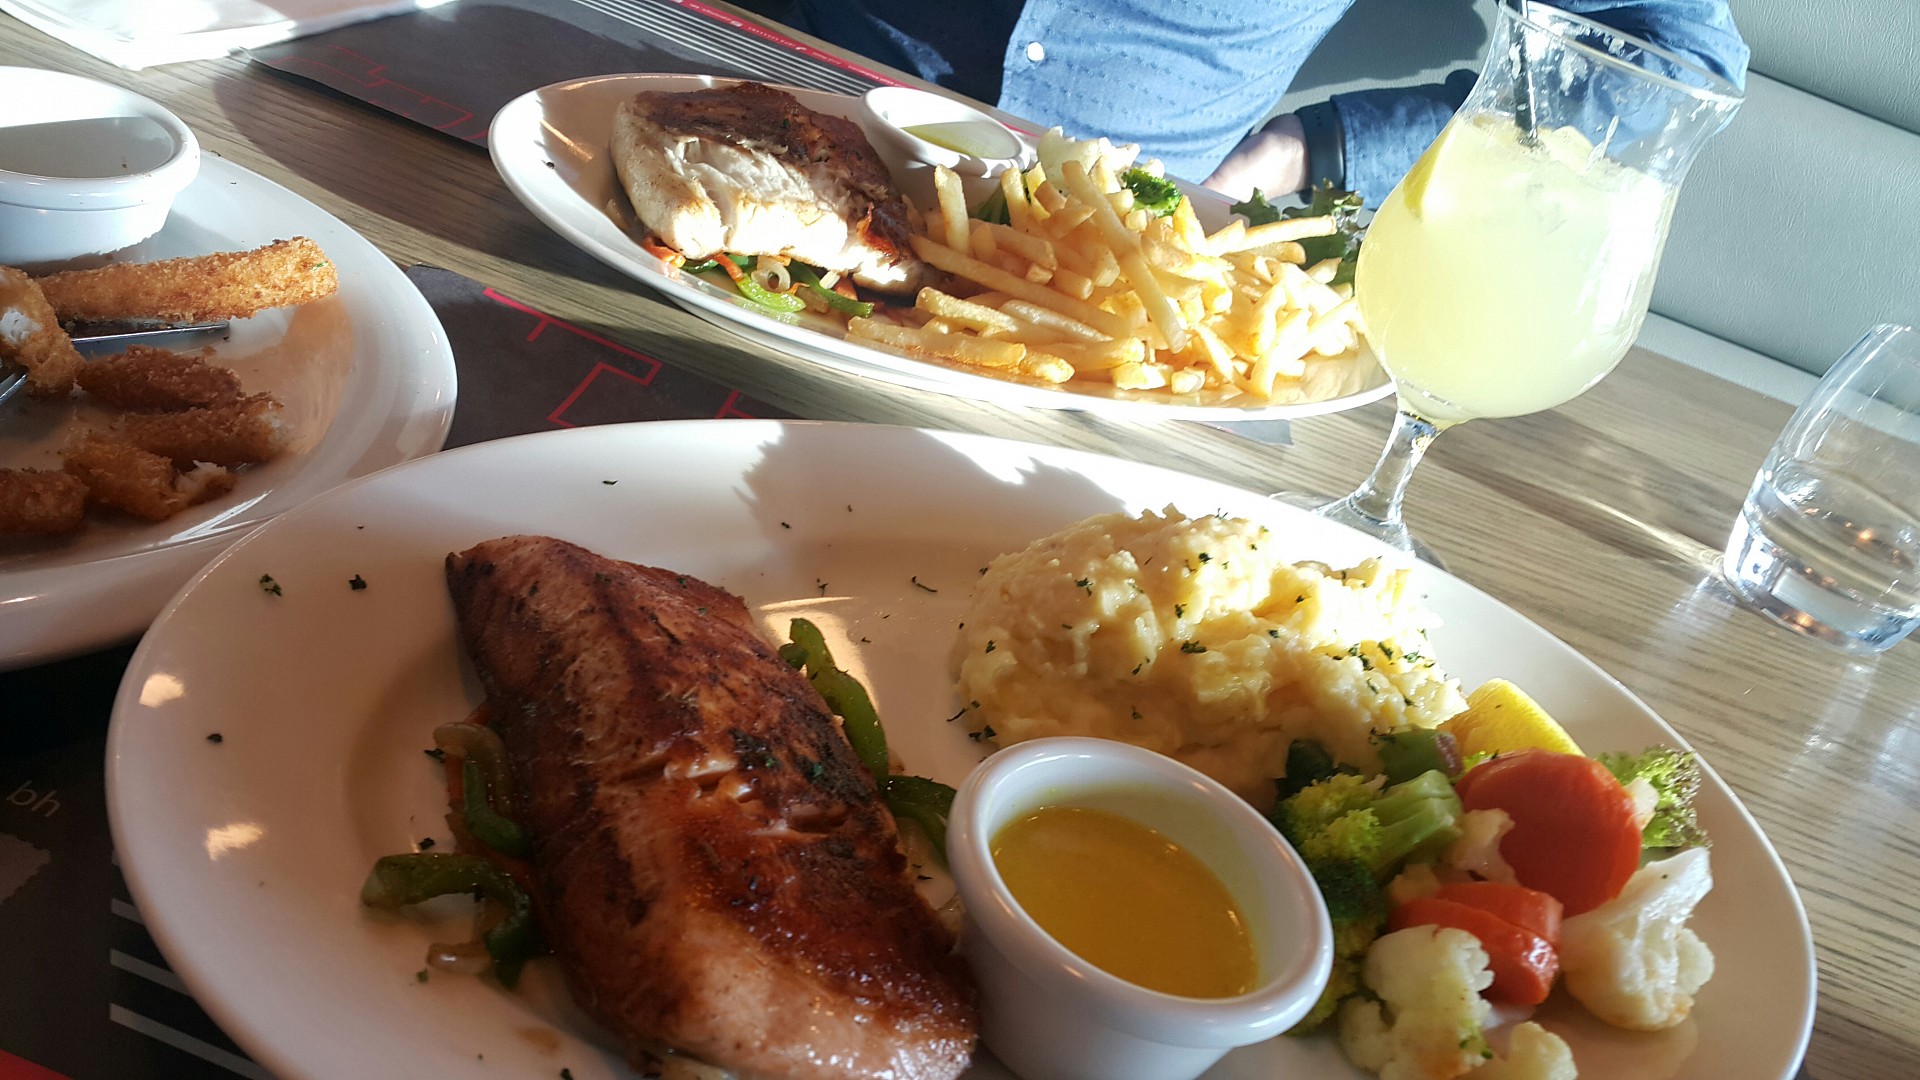 Salmon 😋 always my fav seafood dish 👌👌 @ Jimmy's Killer Prawns - Bahrain